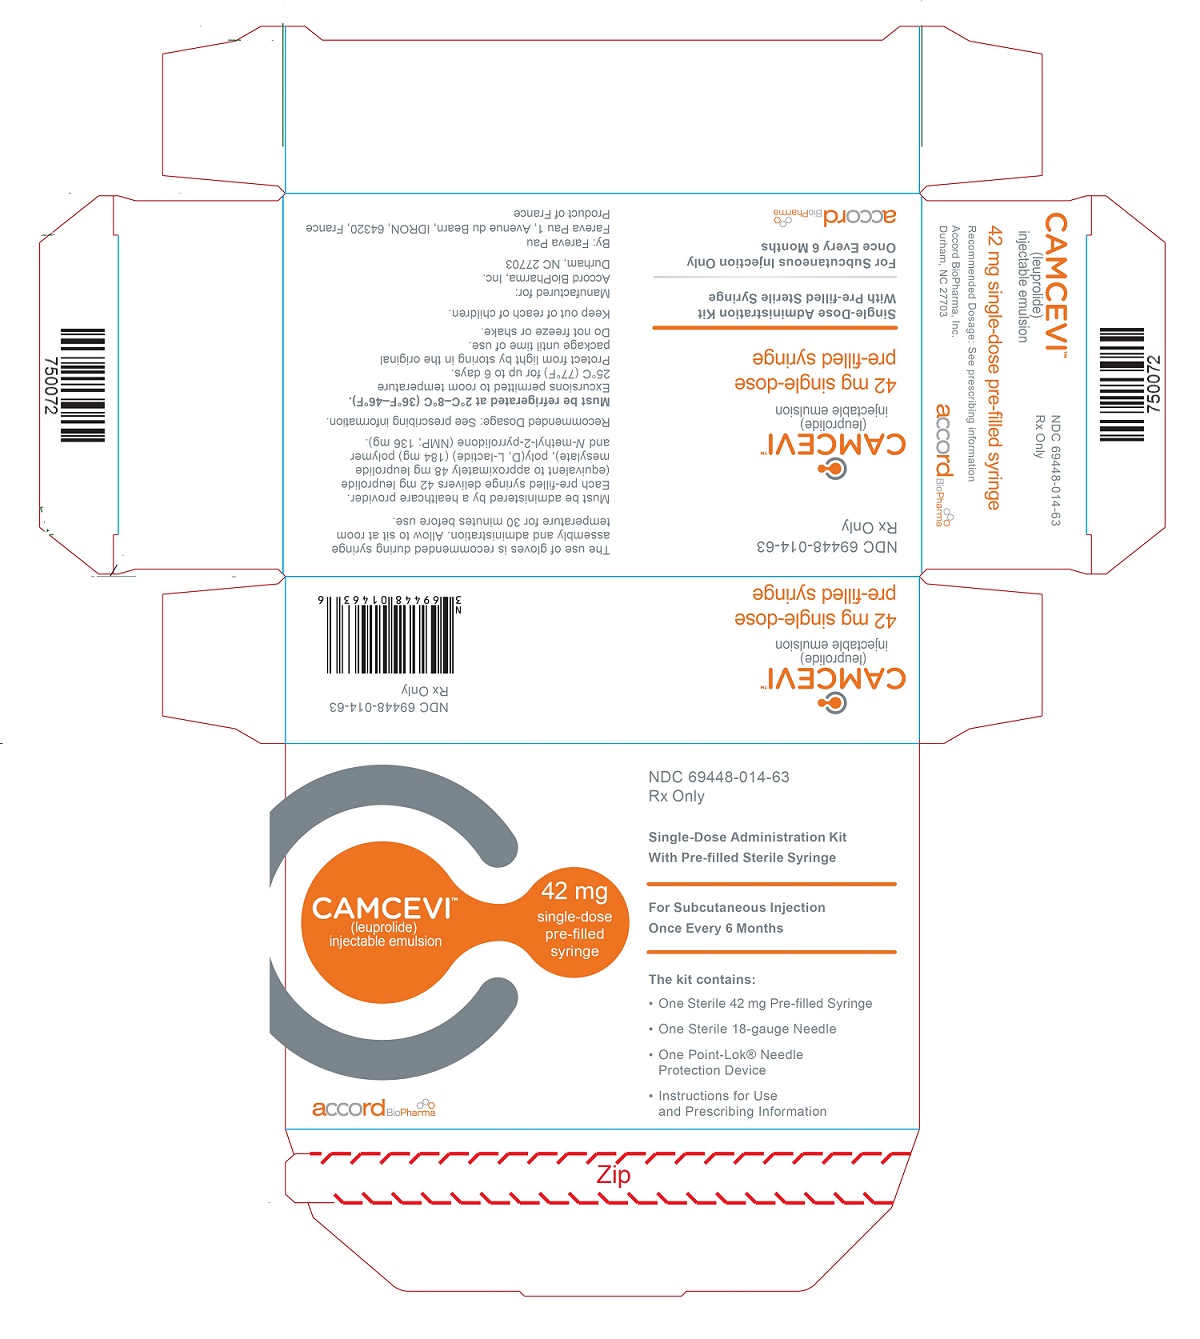 PRINCIPAL DISPLAY PANEL -Carton Label(front)